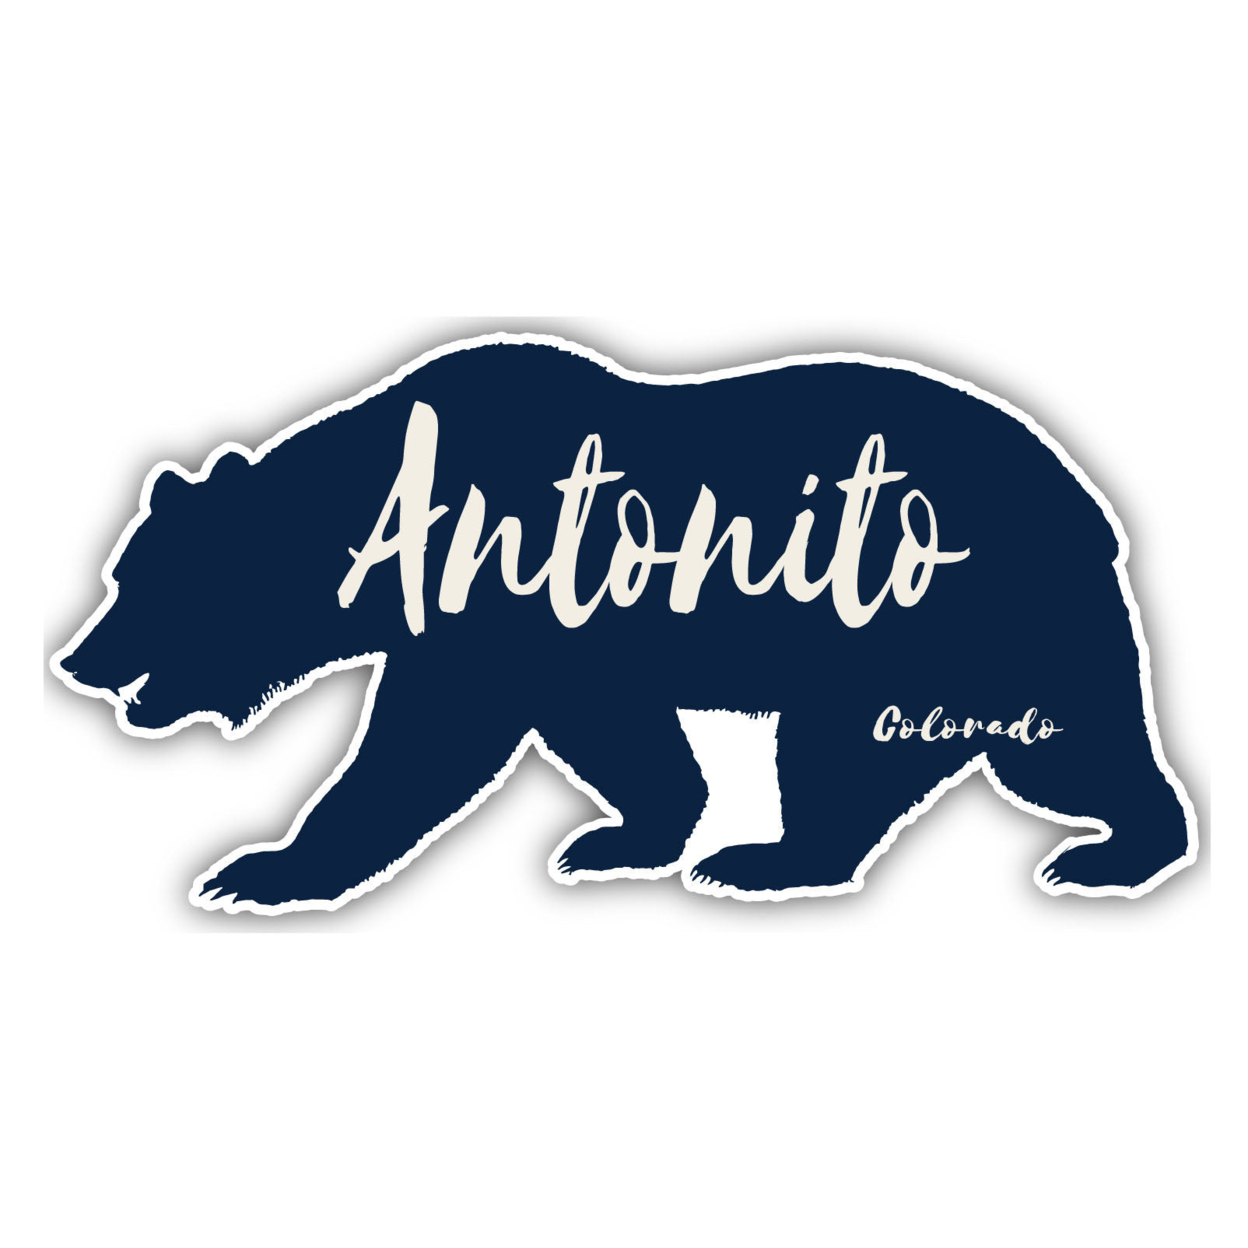 Antonito Colorado Souvenir Decorative Stickers (Choose Theme And Size) - 4-Pack, 6-Inch, Bear